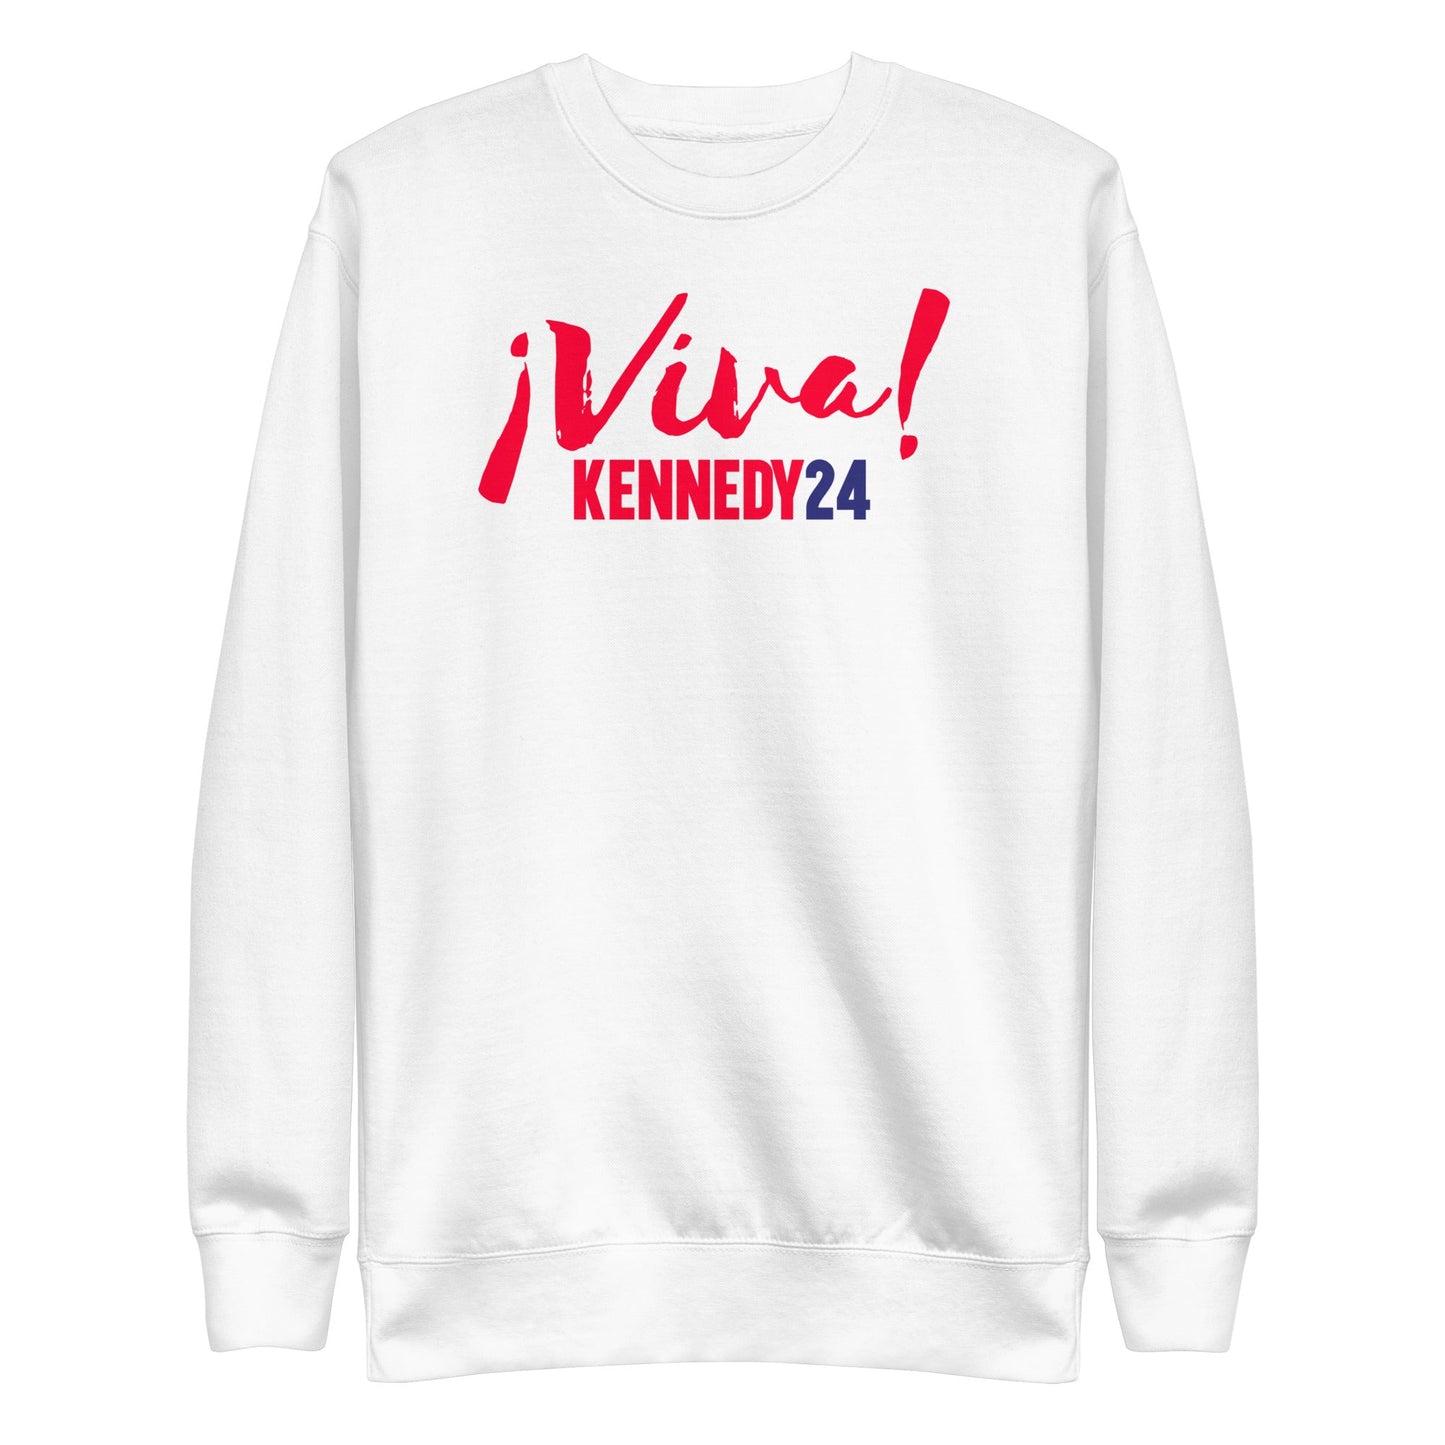 Viva Kennedy24 Unisex Premium Sweatshirt - TEAM KENNEDY. All rights reserved